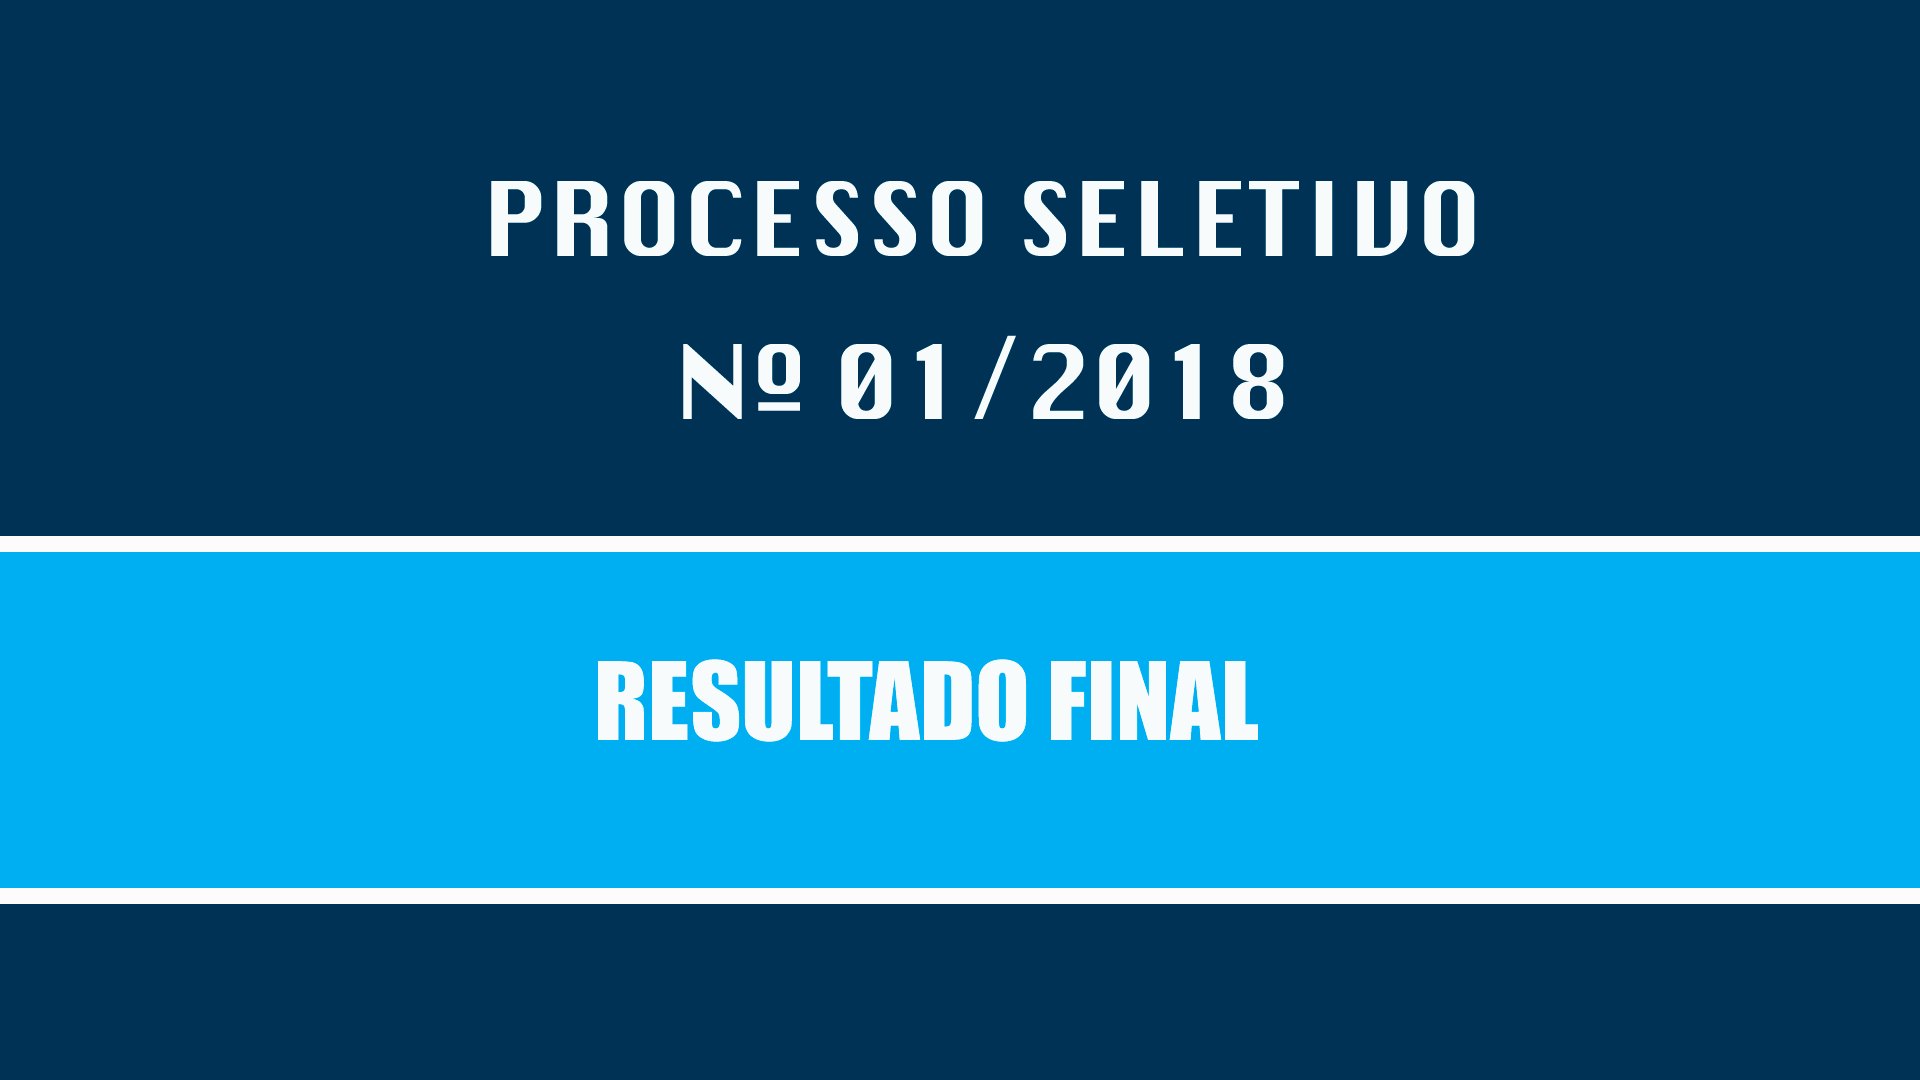 PROCESSO SELETIVO Nº 001/2018 - RESULTADO FINAL